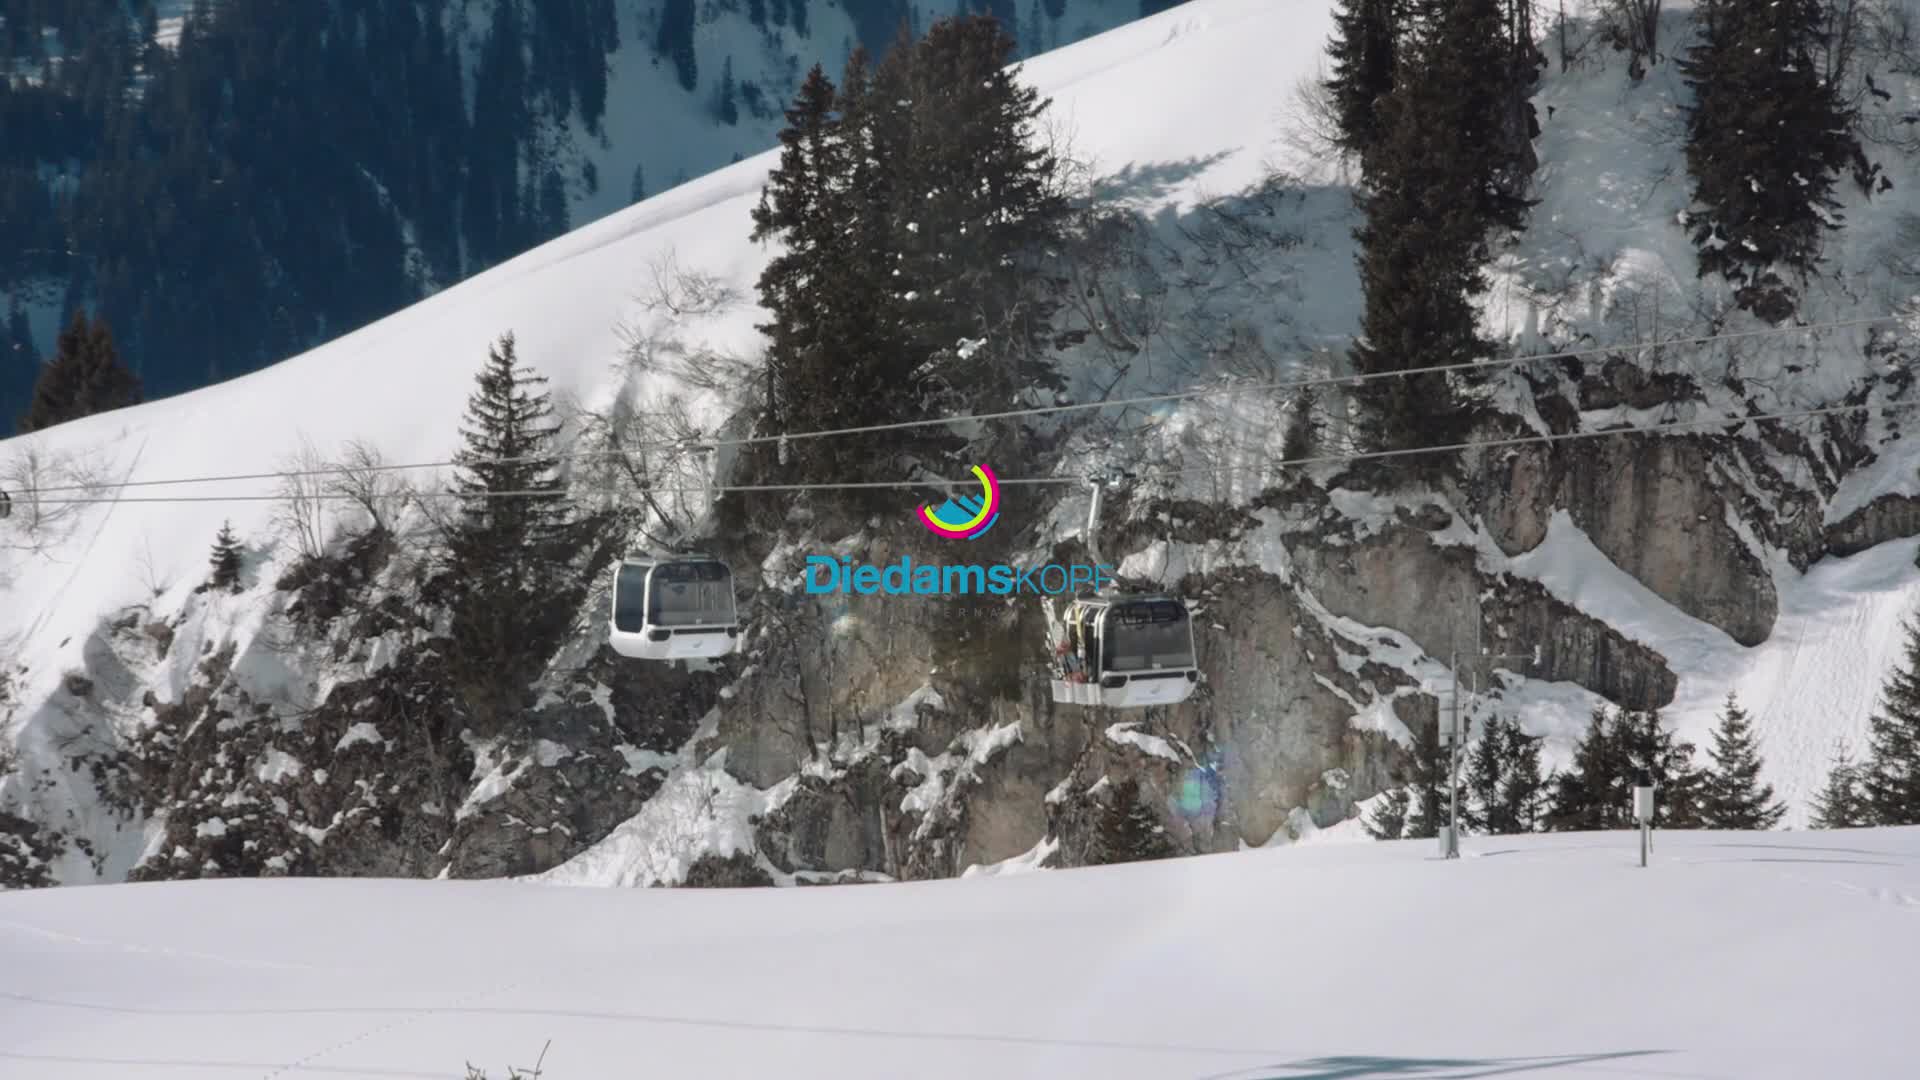 Pleasure Diedamspark - Ultimate Snowboard